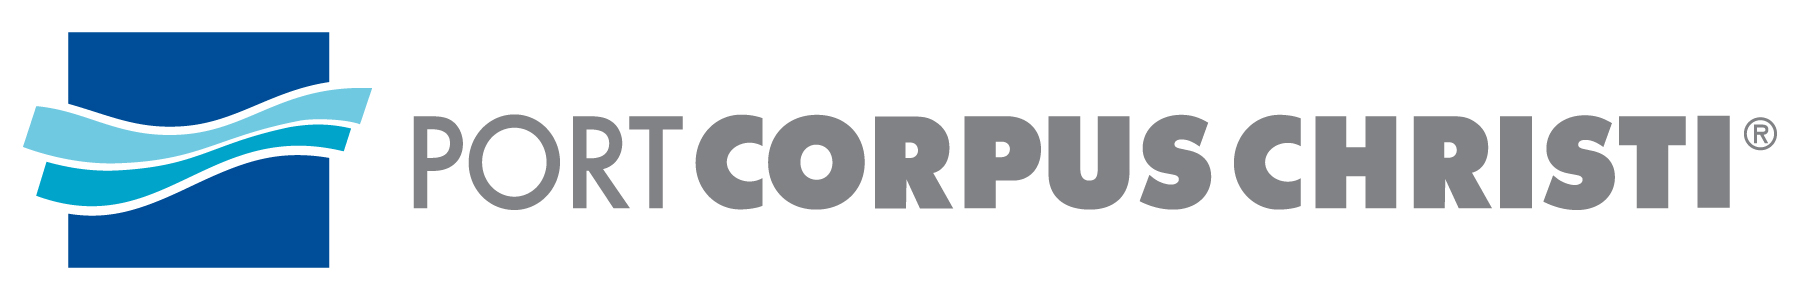 Port Corpus Christi Logo